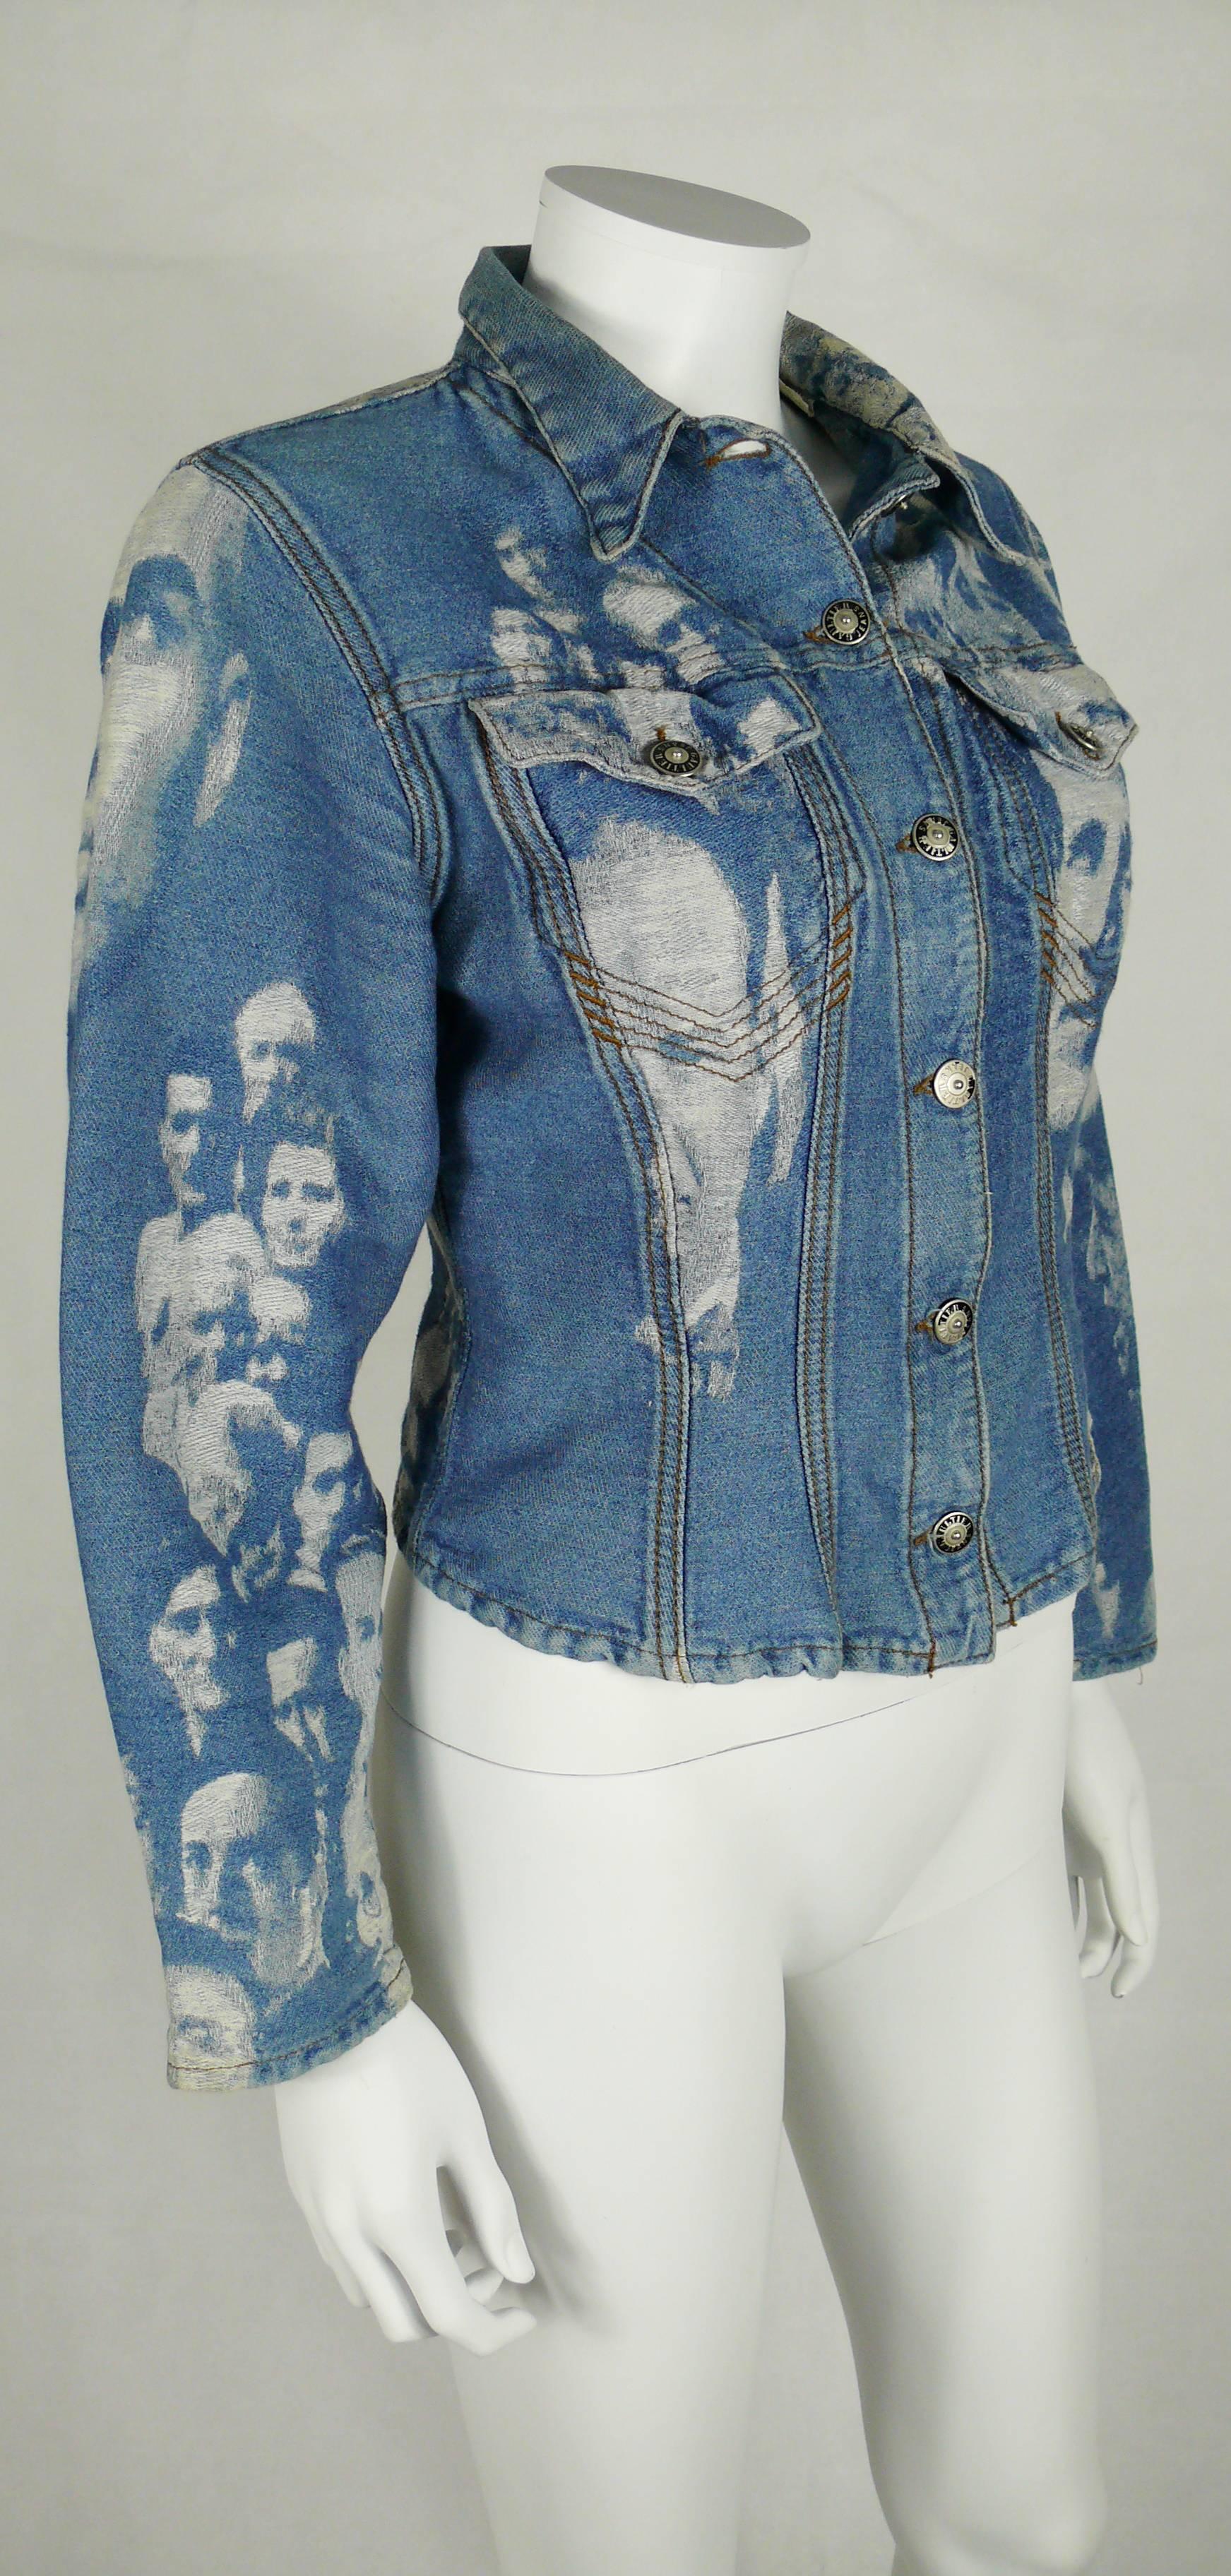 JEAN PAUL GAULTIER vintage blue cotton face jacquard denim jacket.

This jacket features :
- Front button fastening.
- Long sleeves.
- Front pockets.
- Adjustable back half-belt.

Label reads GAULTIER JEAN'S.

Composition label reads : 100 %